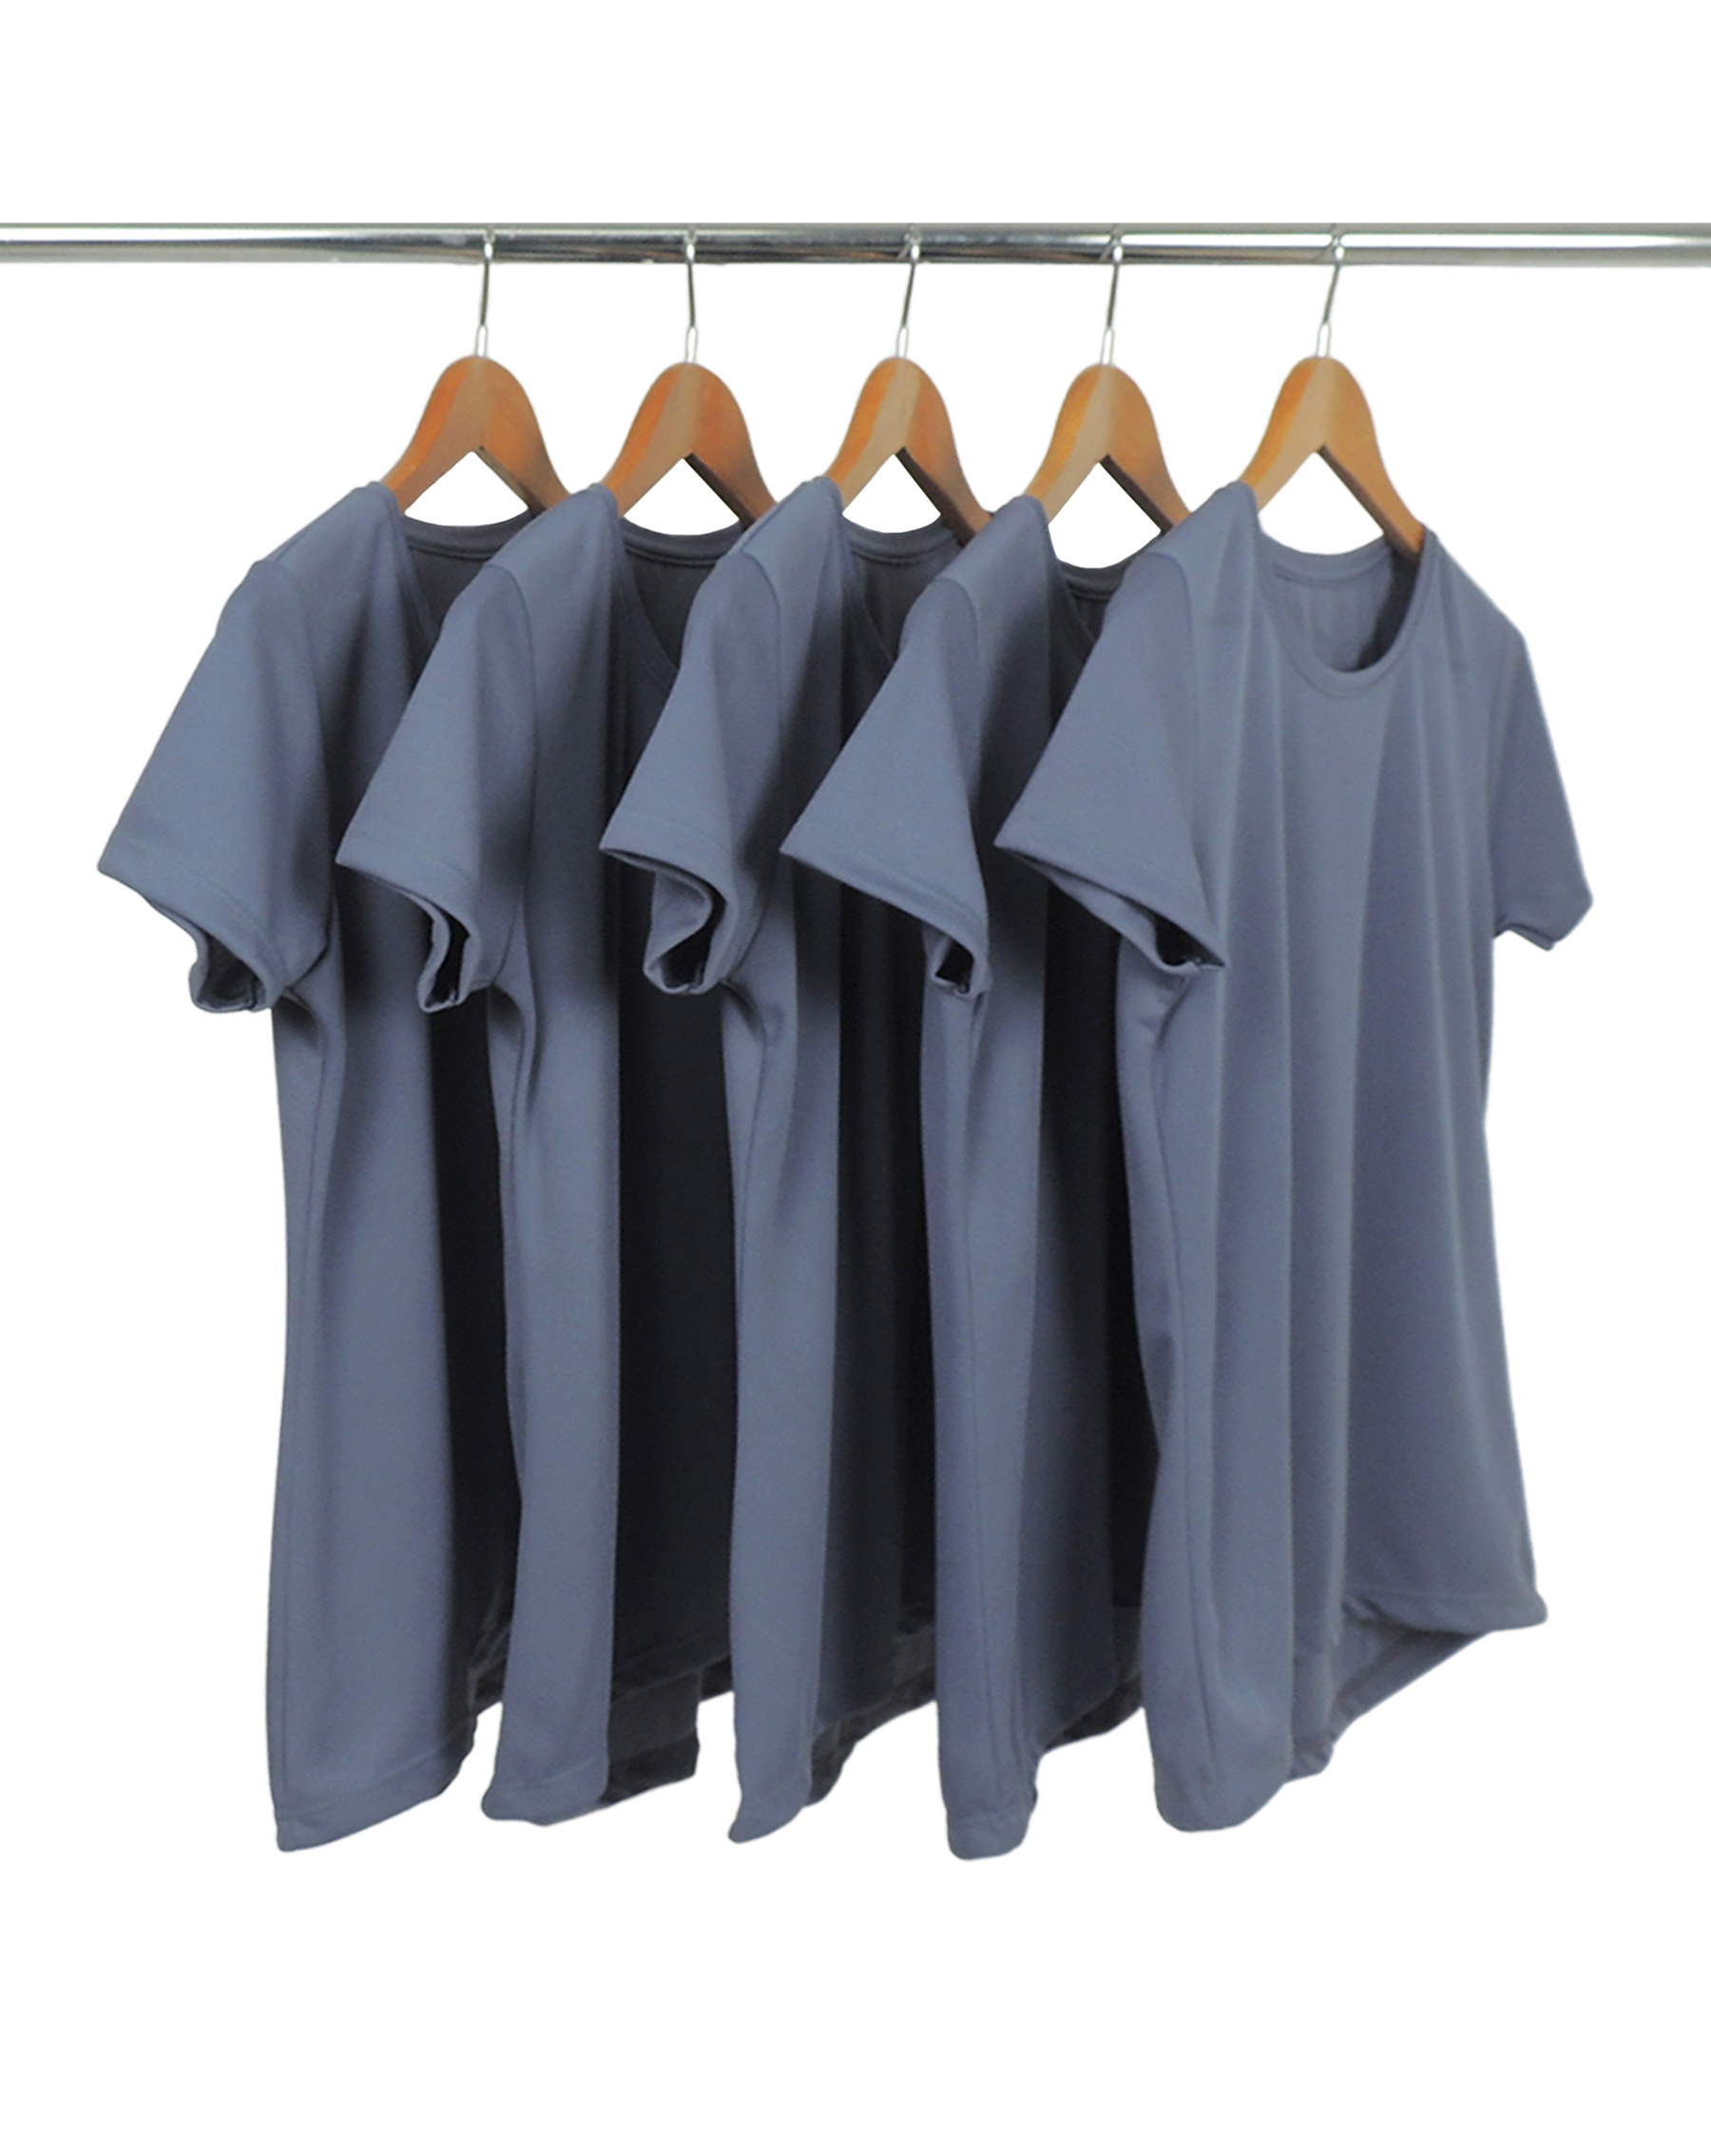 KIT 5 Camisetas Femininas Dry Fit Cinza Titanium Proteção UV 30+